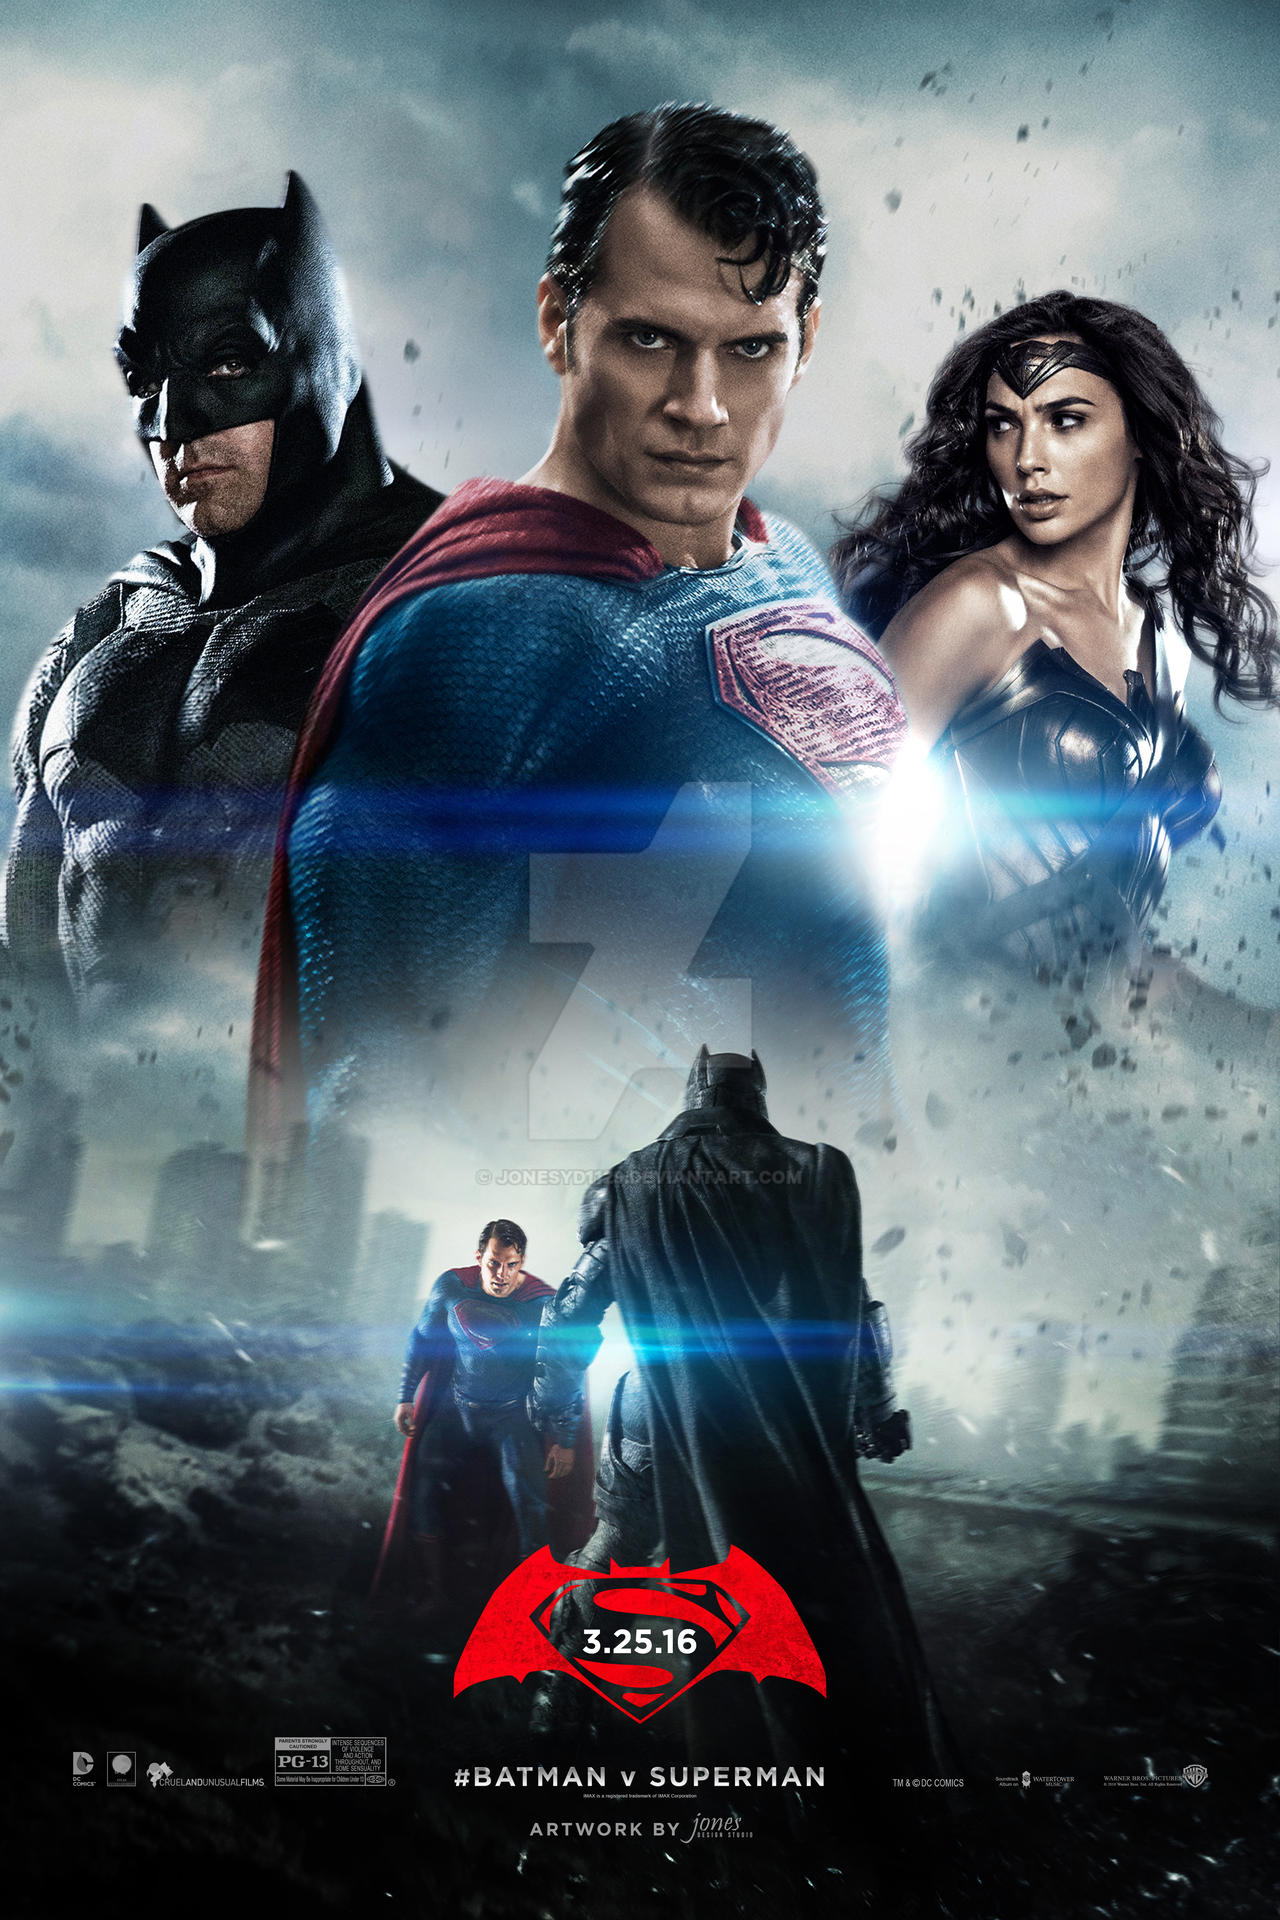 Batman v. Superman: Dawn of Justice Poster 4 by jonesyd1129 on DeviantArt